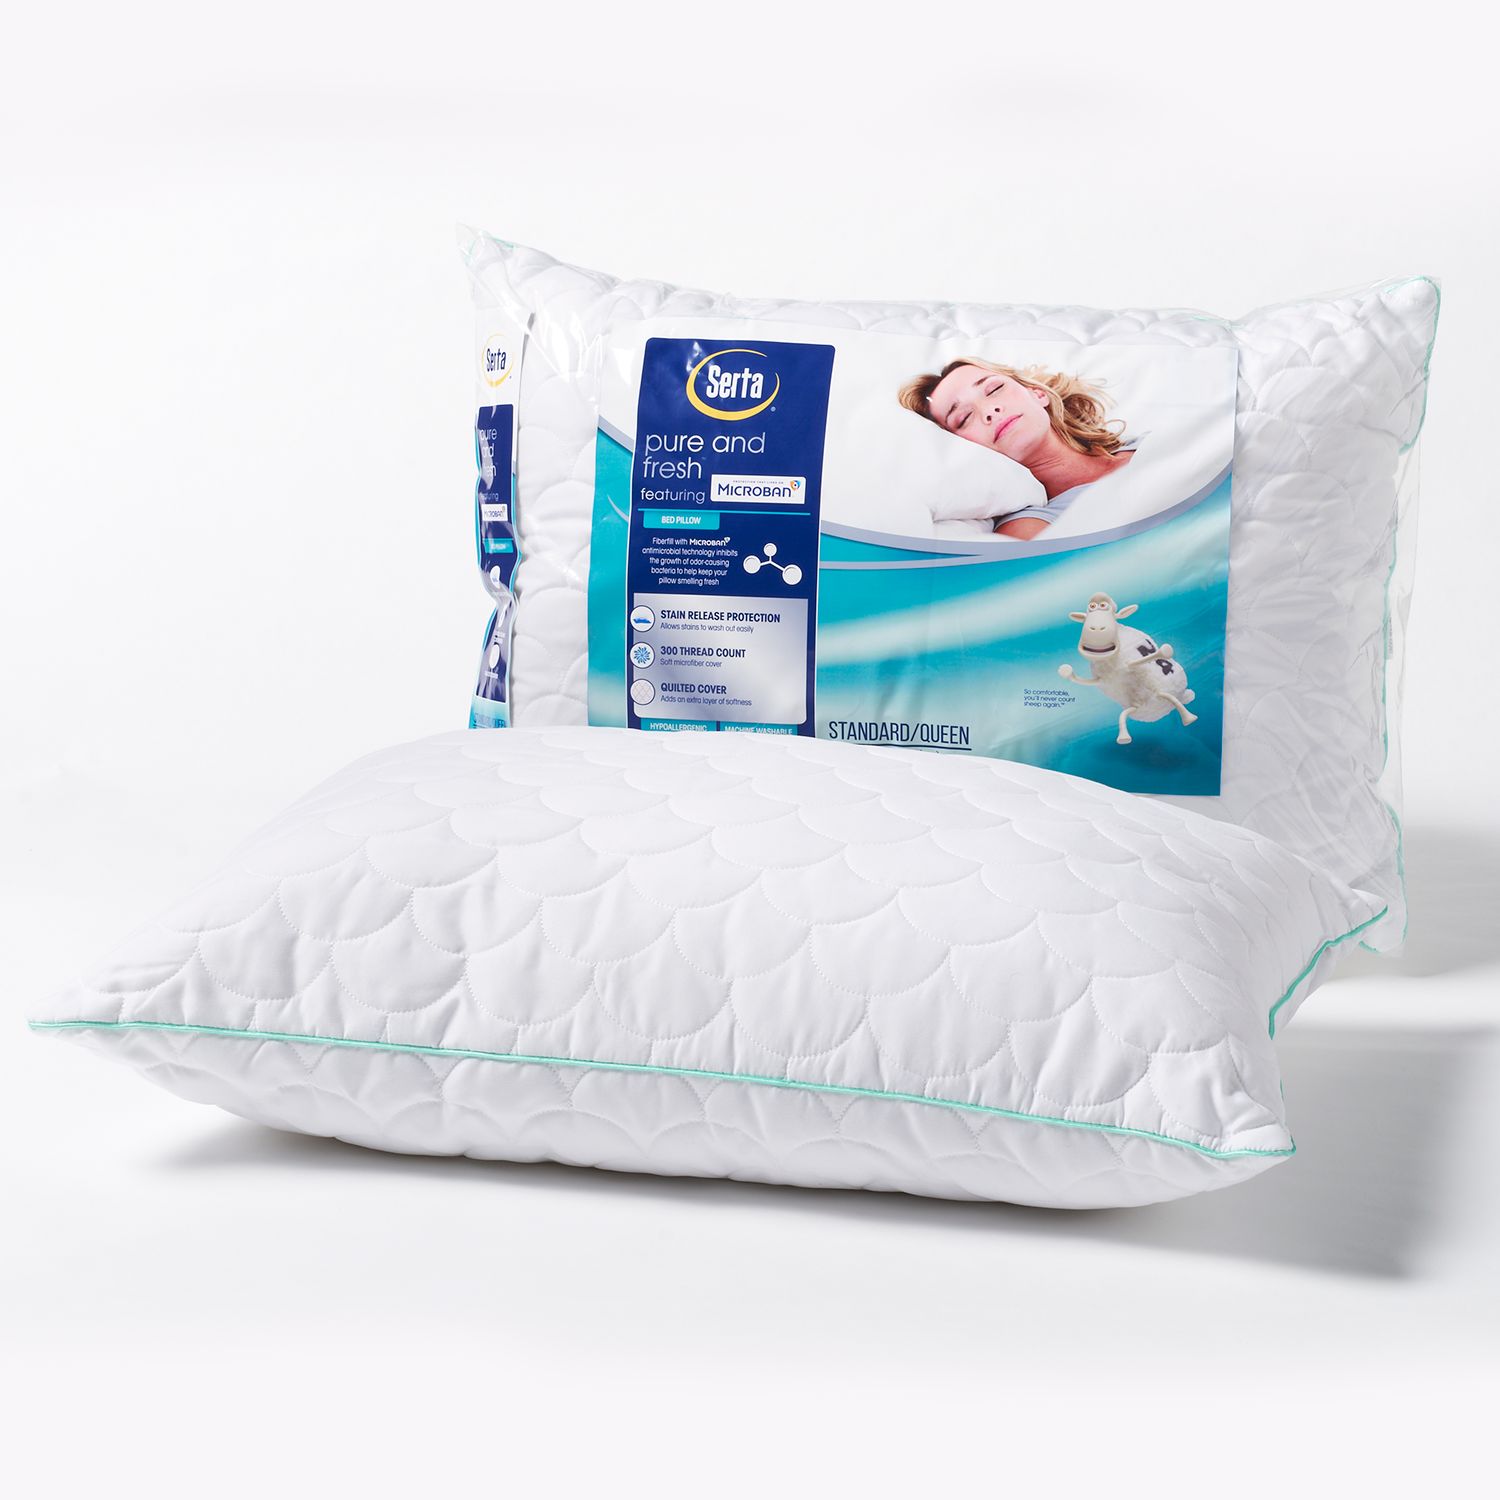 Serta Pure \u0026 Fresh Bed Pillow